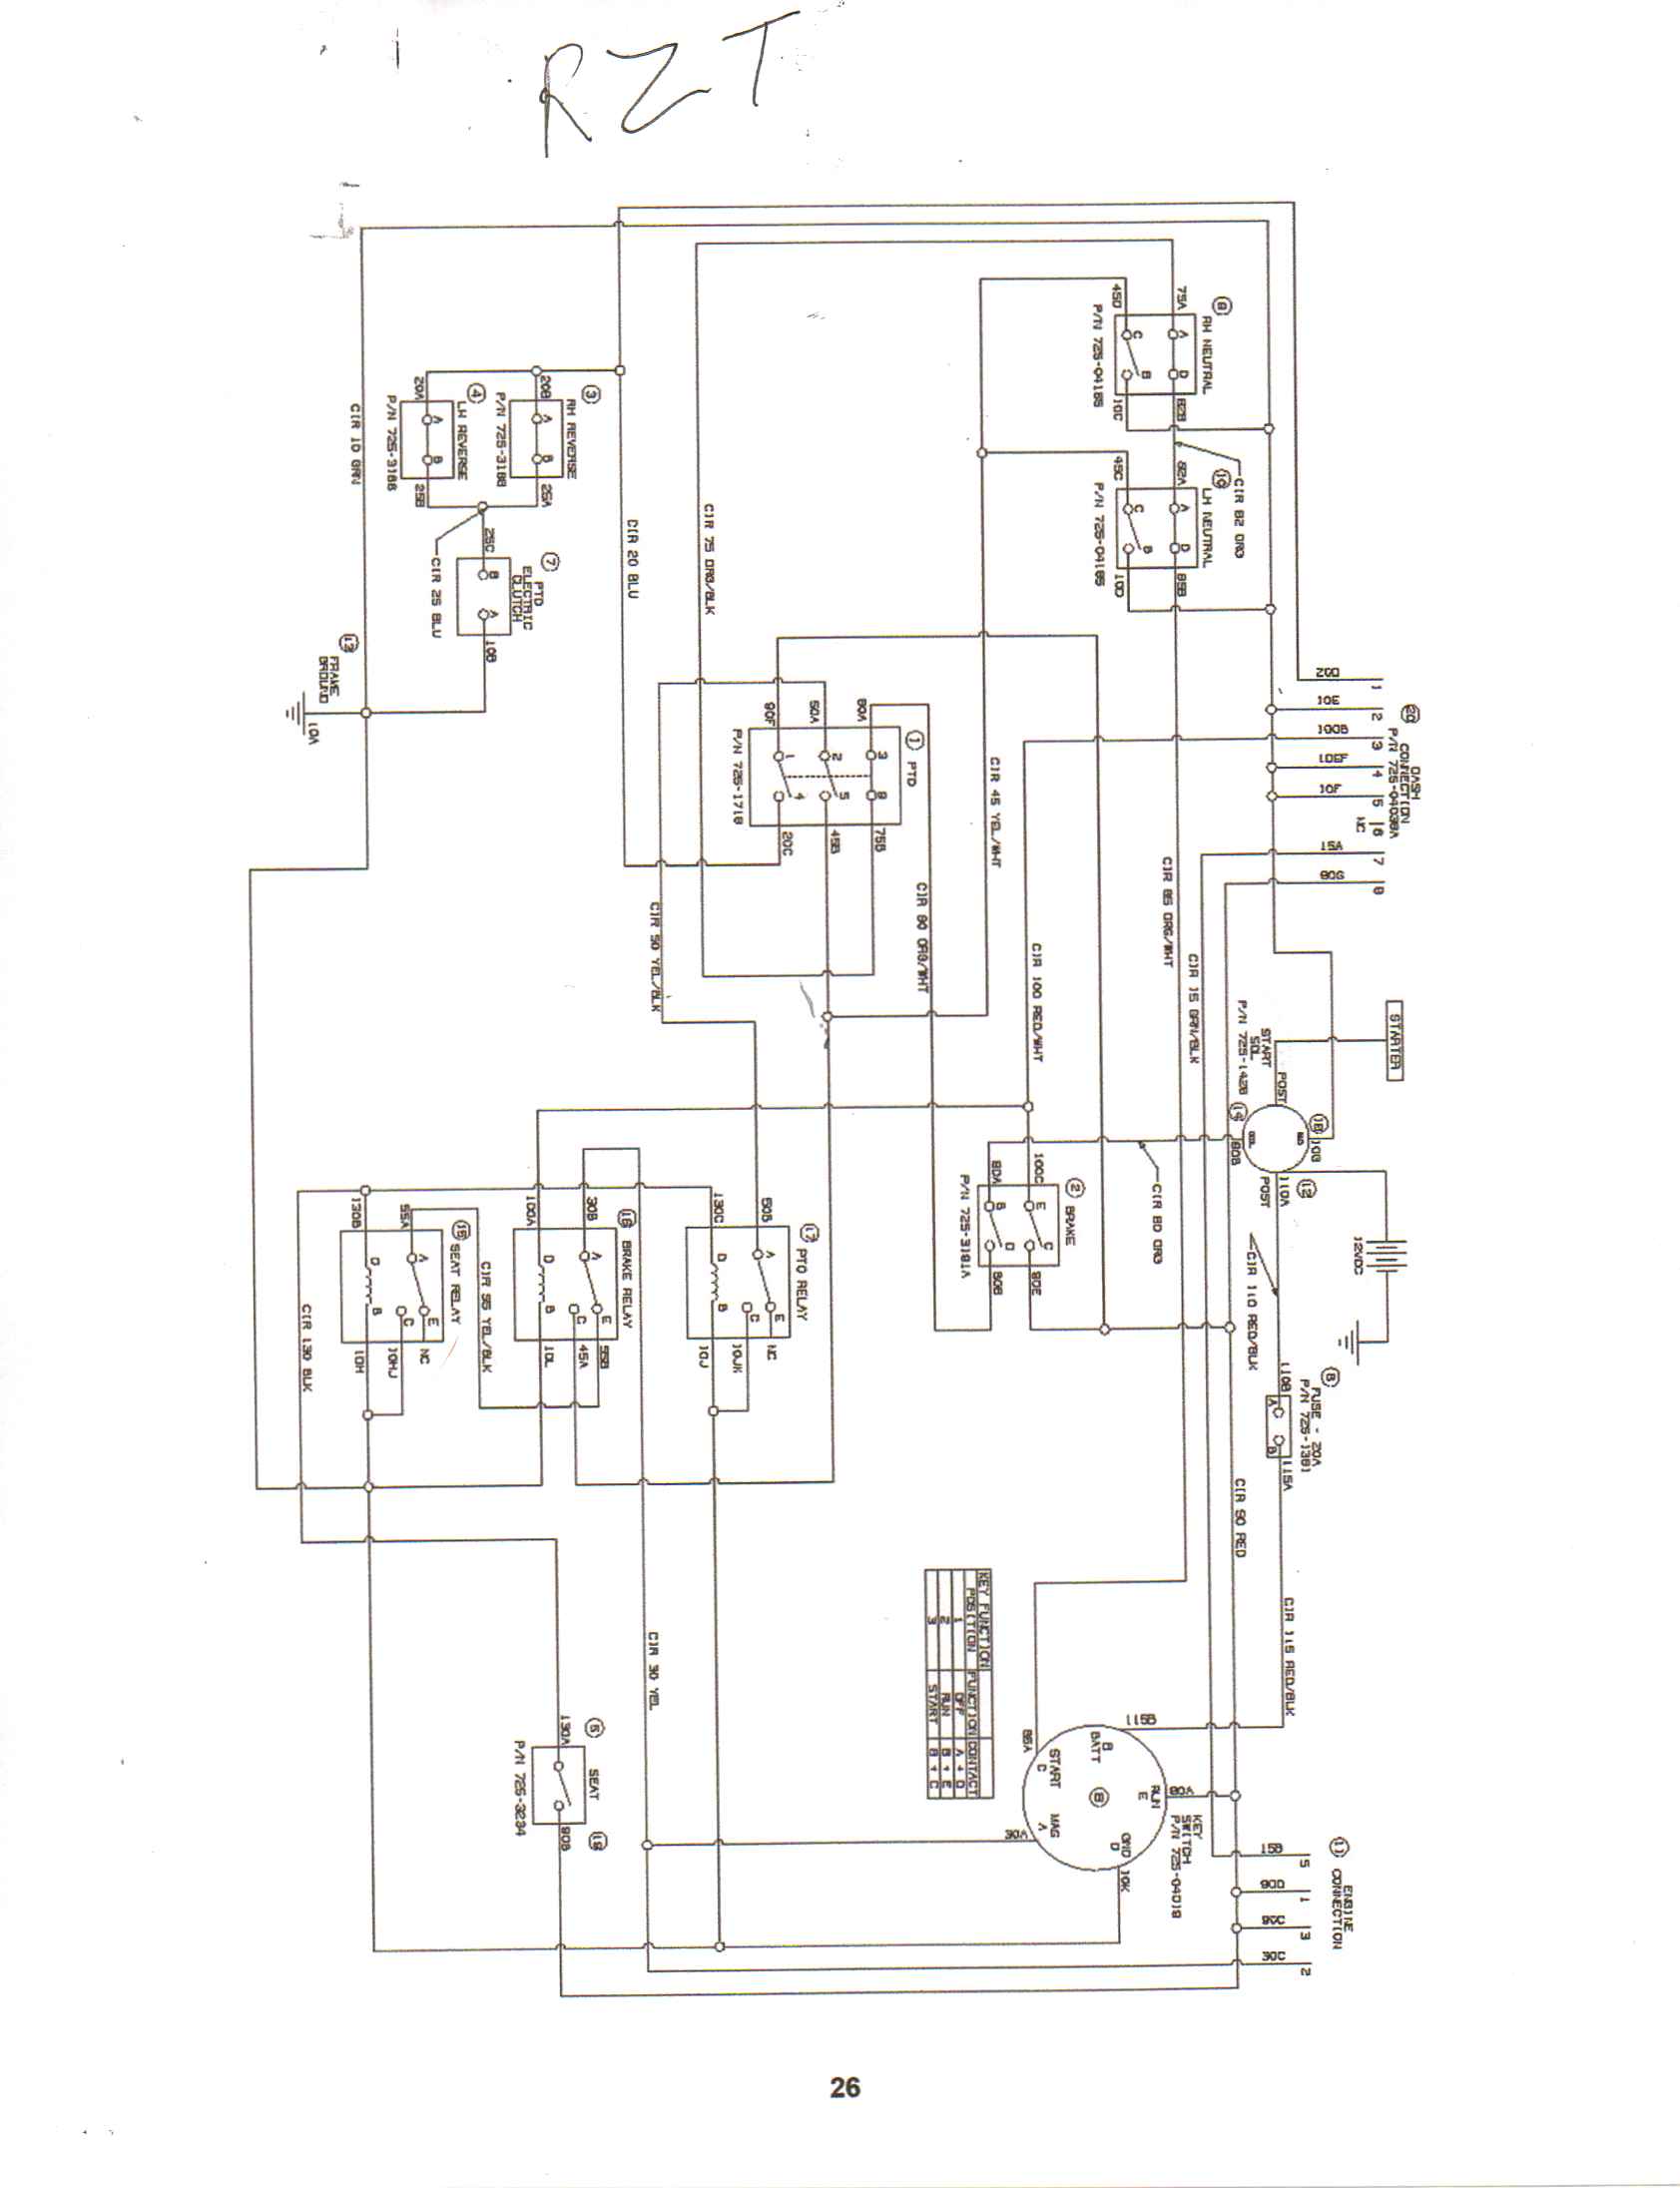 wiring diagram for cub cadet rzt 50